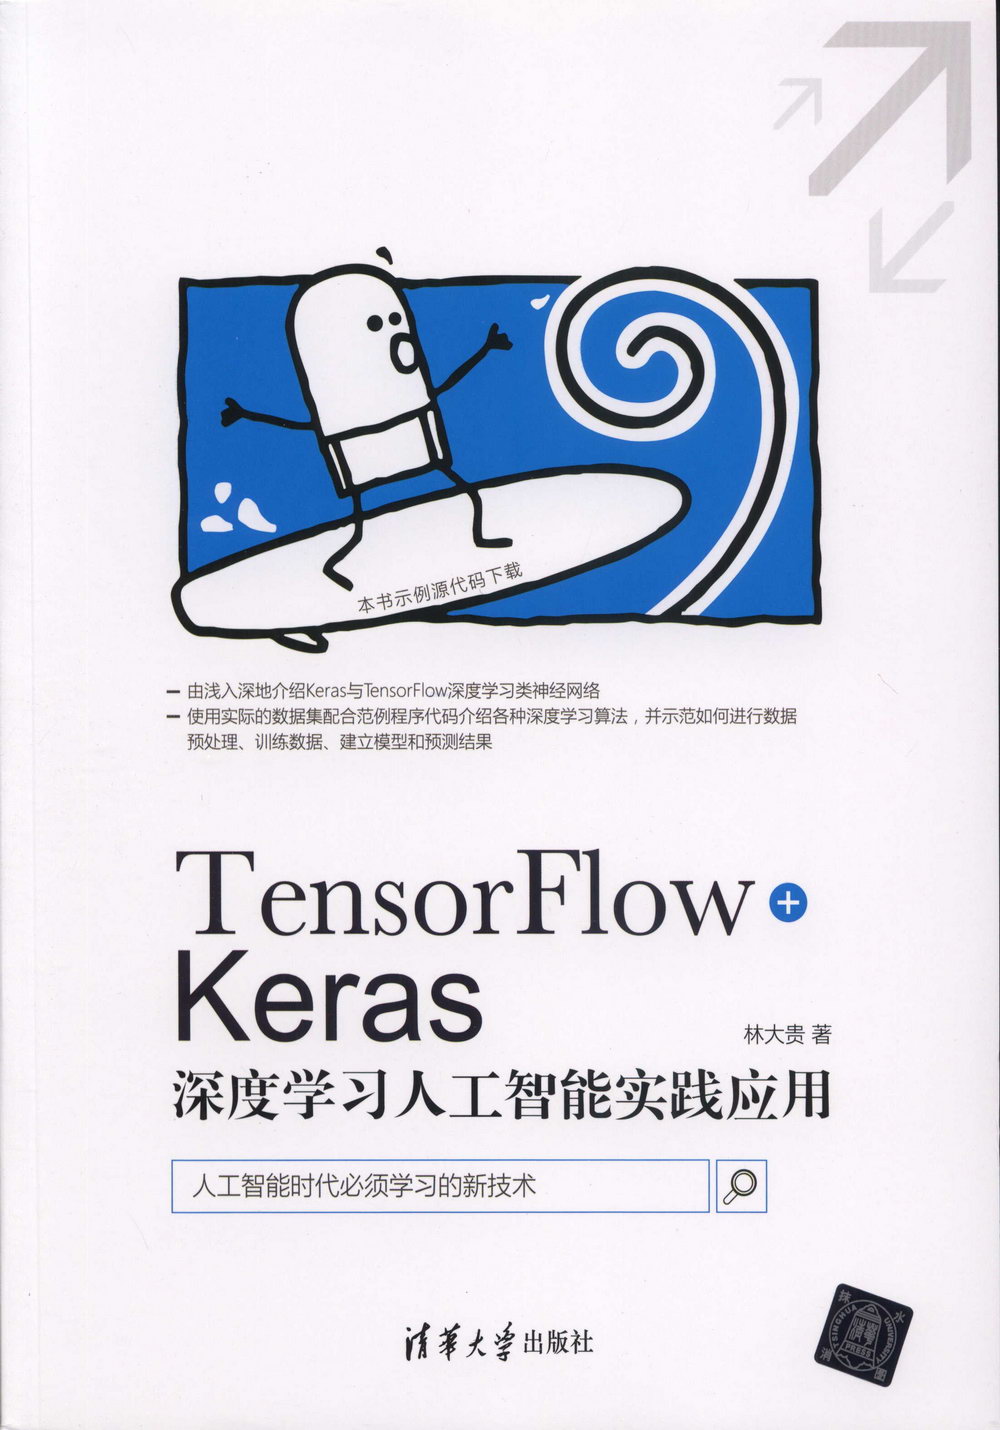 TensorFlow+Keras深度學習人工智能實踐應用